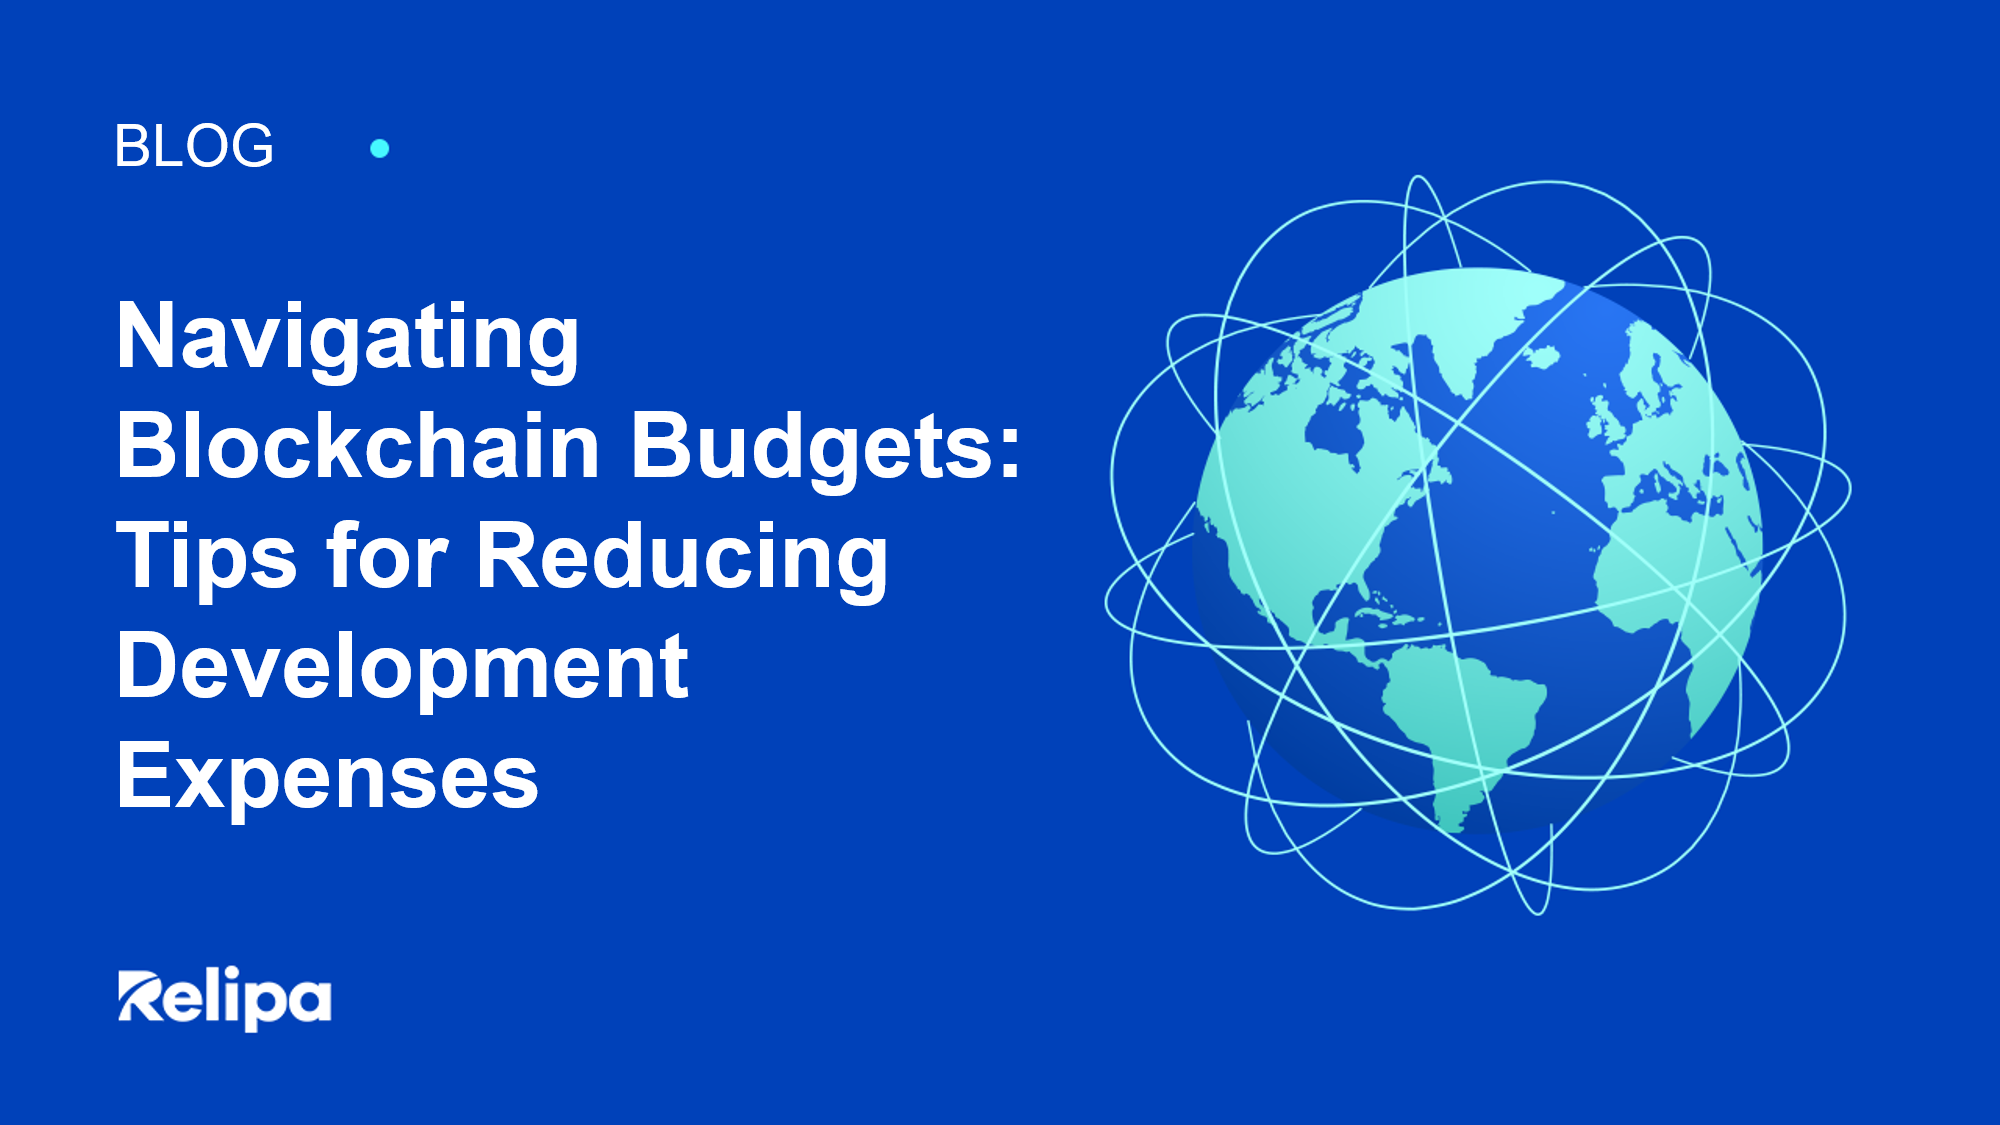 Navigating Blockchain Budgets: Tips for Reducing Development Expenses